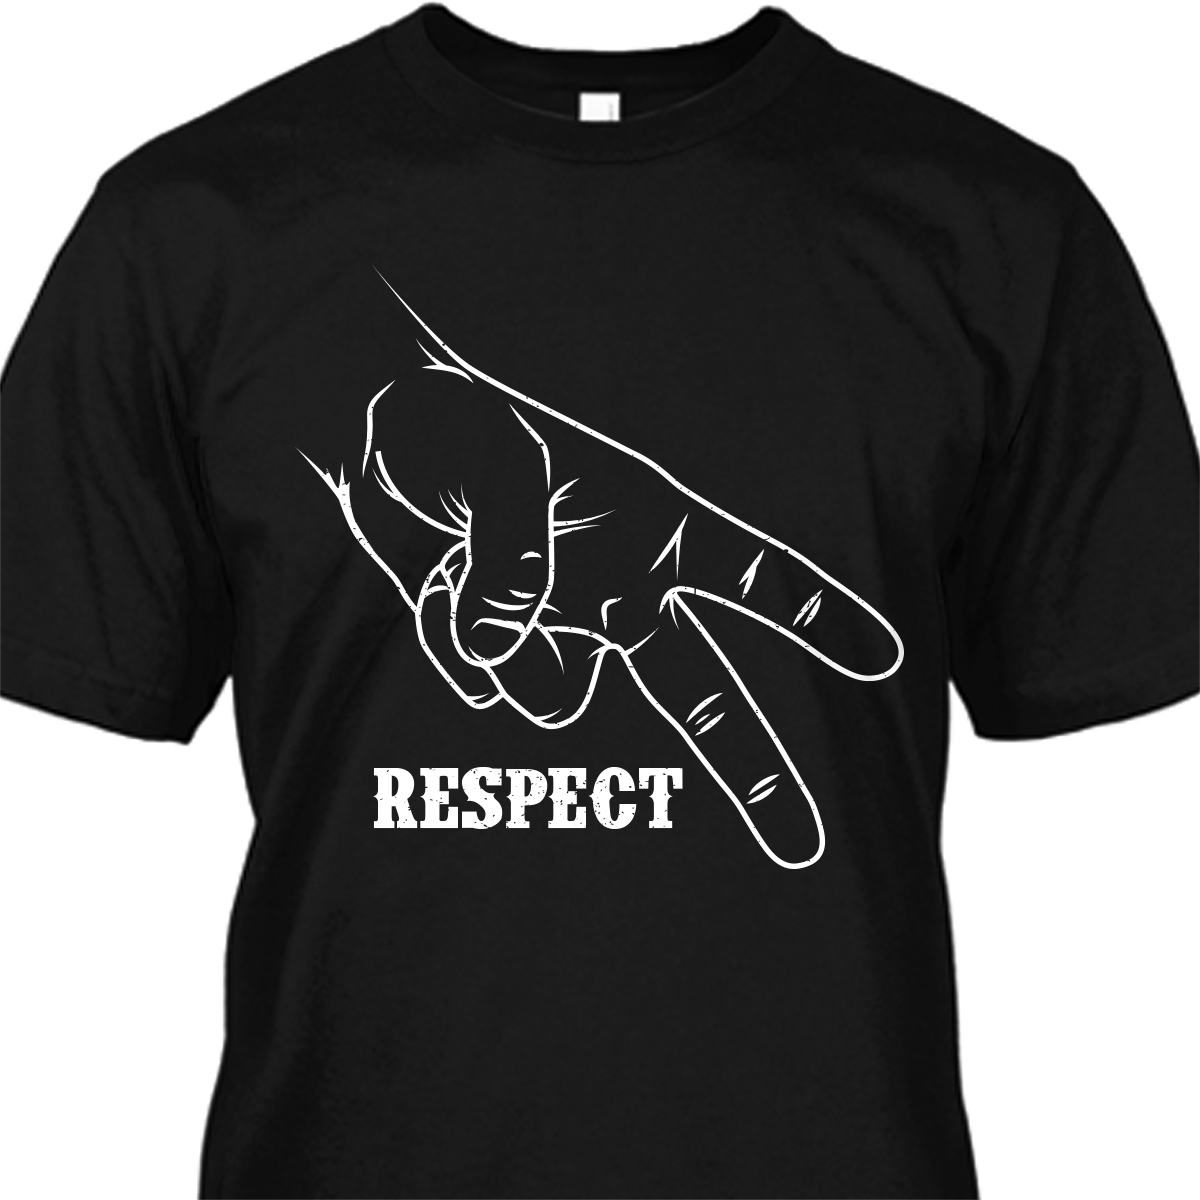 Respect Premium Cotton Shirt